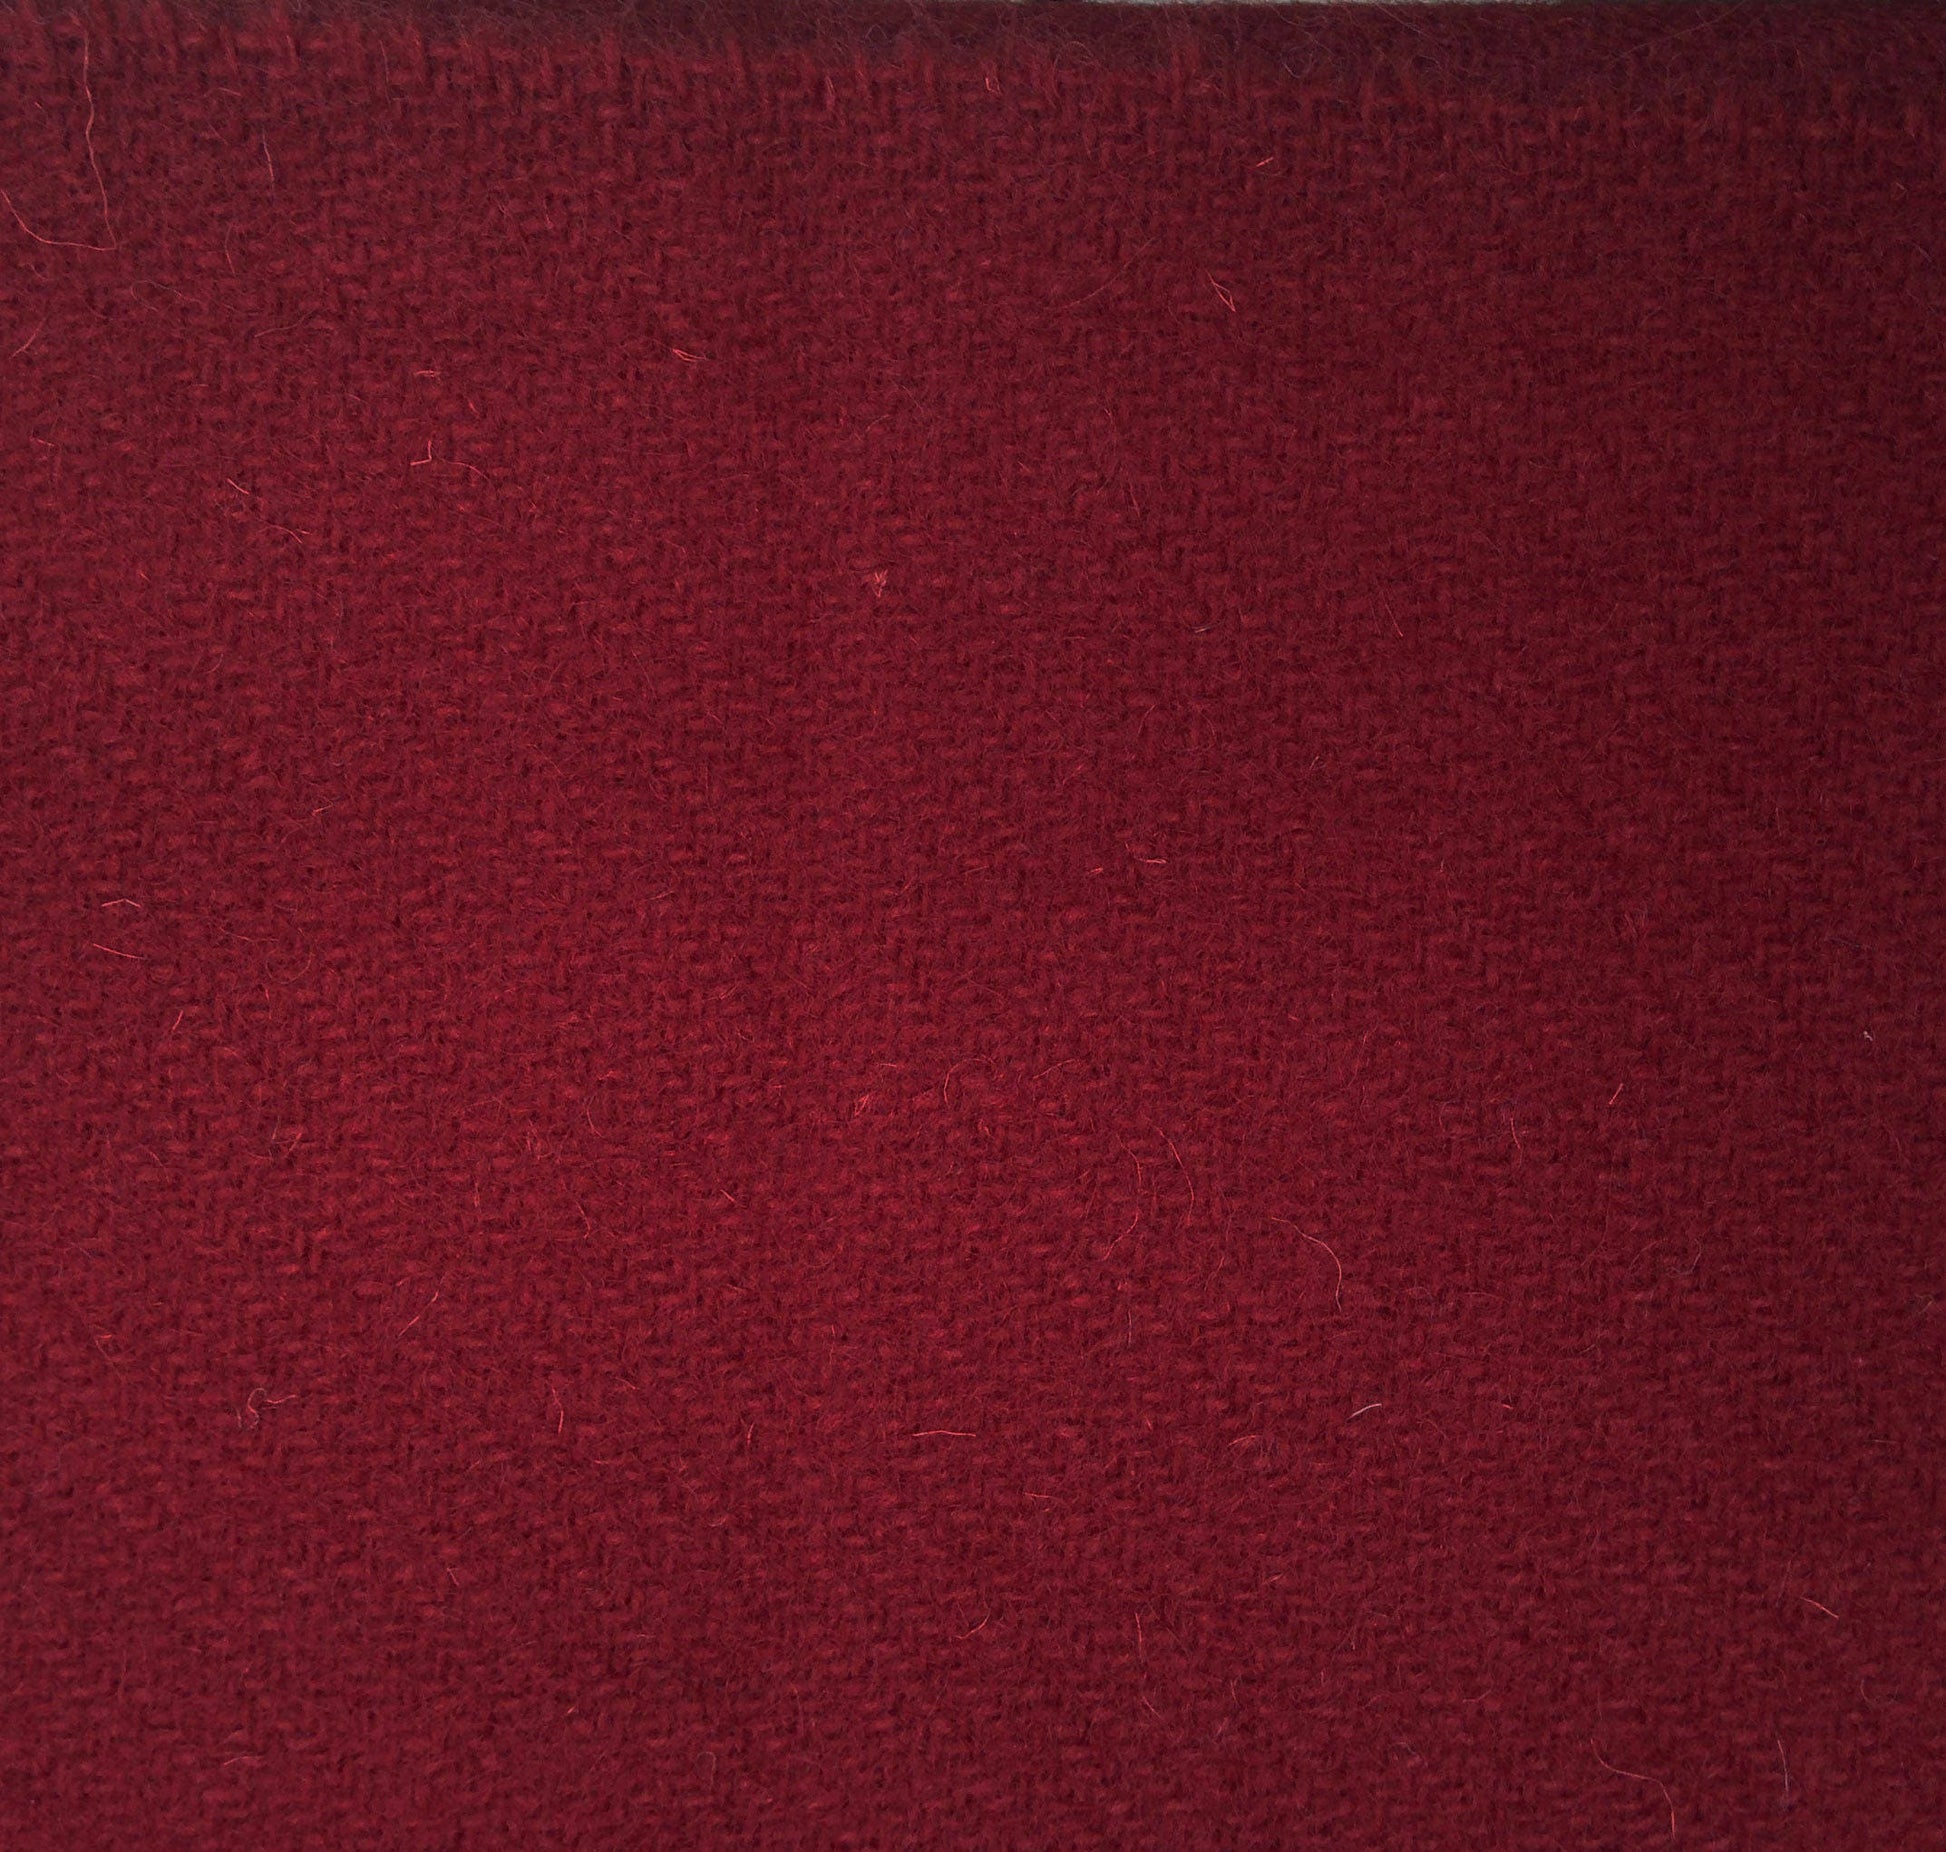 Murrey or wine red Tudor style woollen 2/2 twill cloth - fabric sold by the  half yard